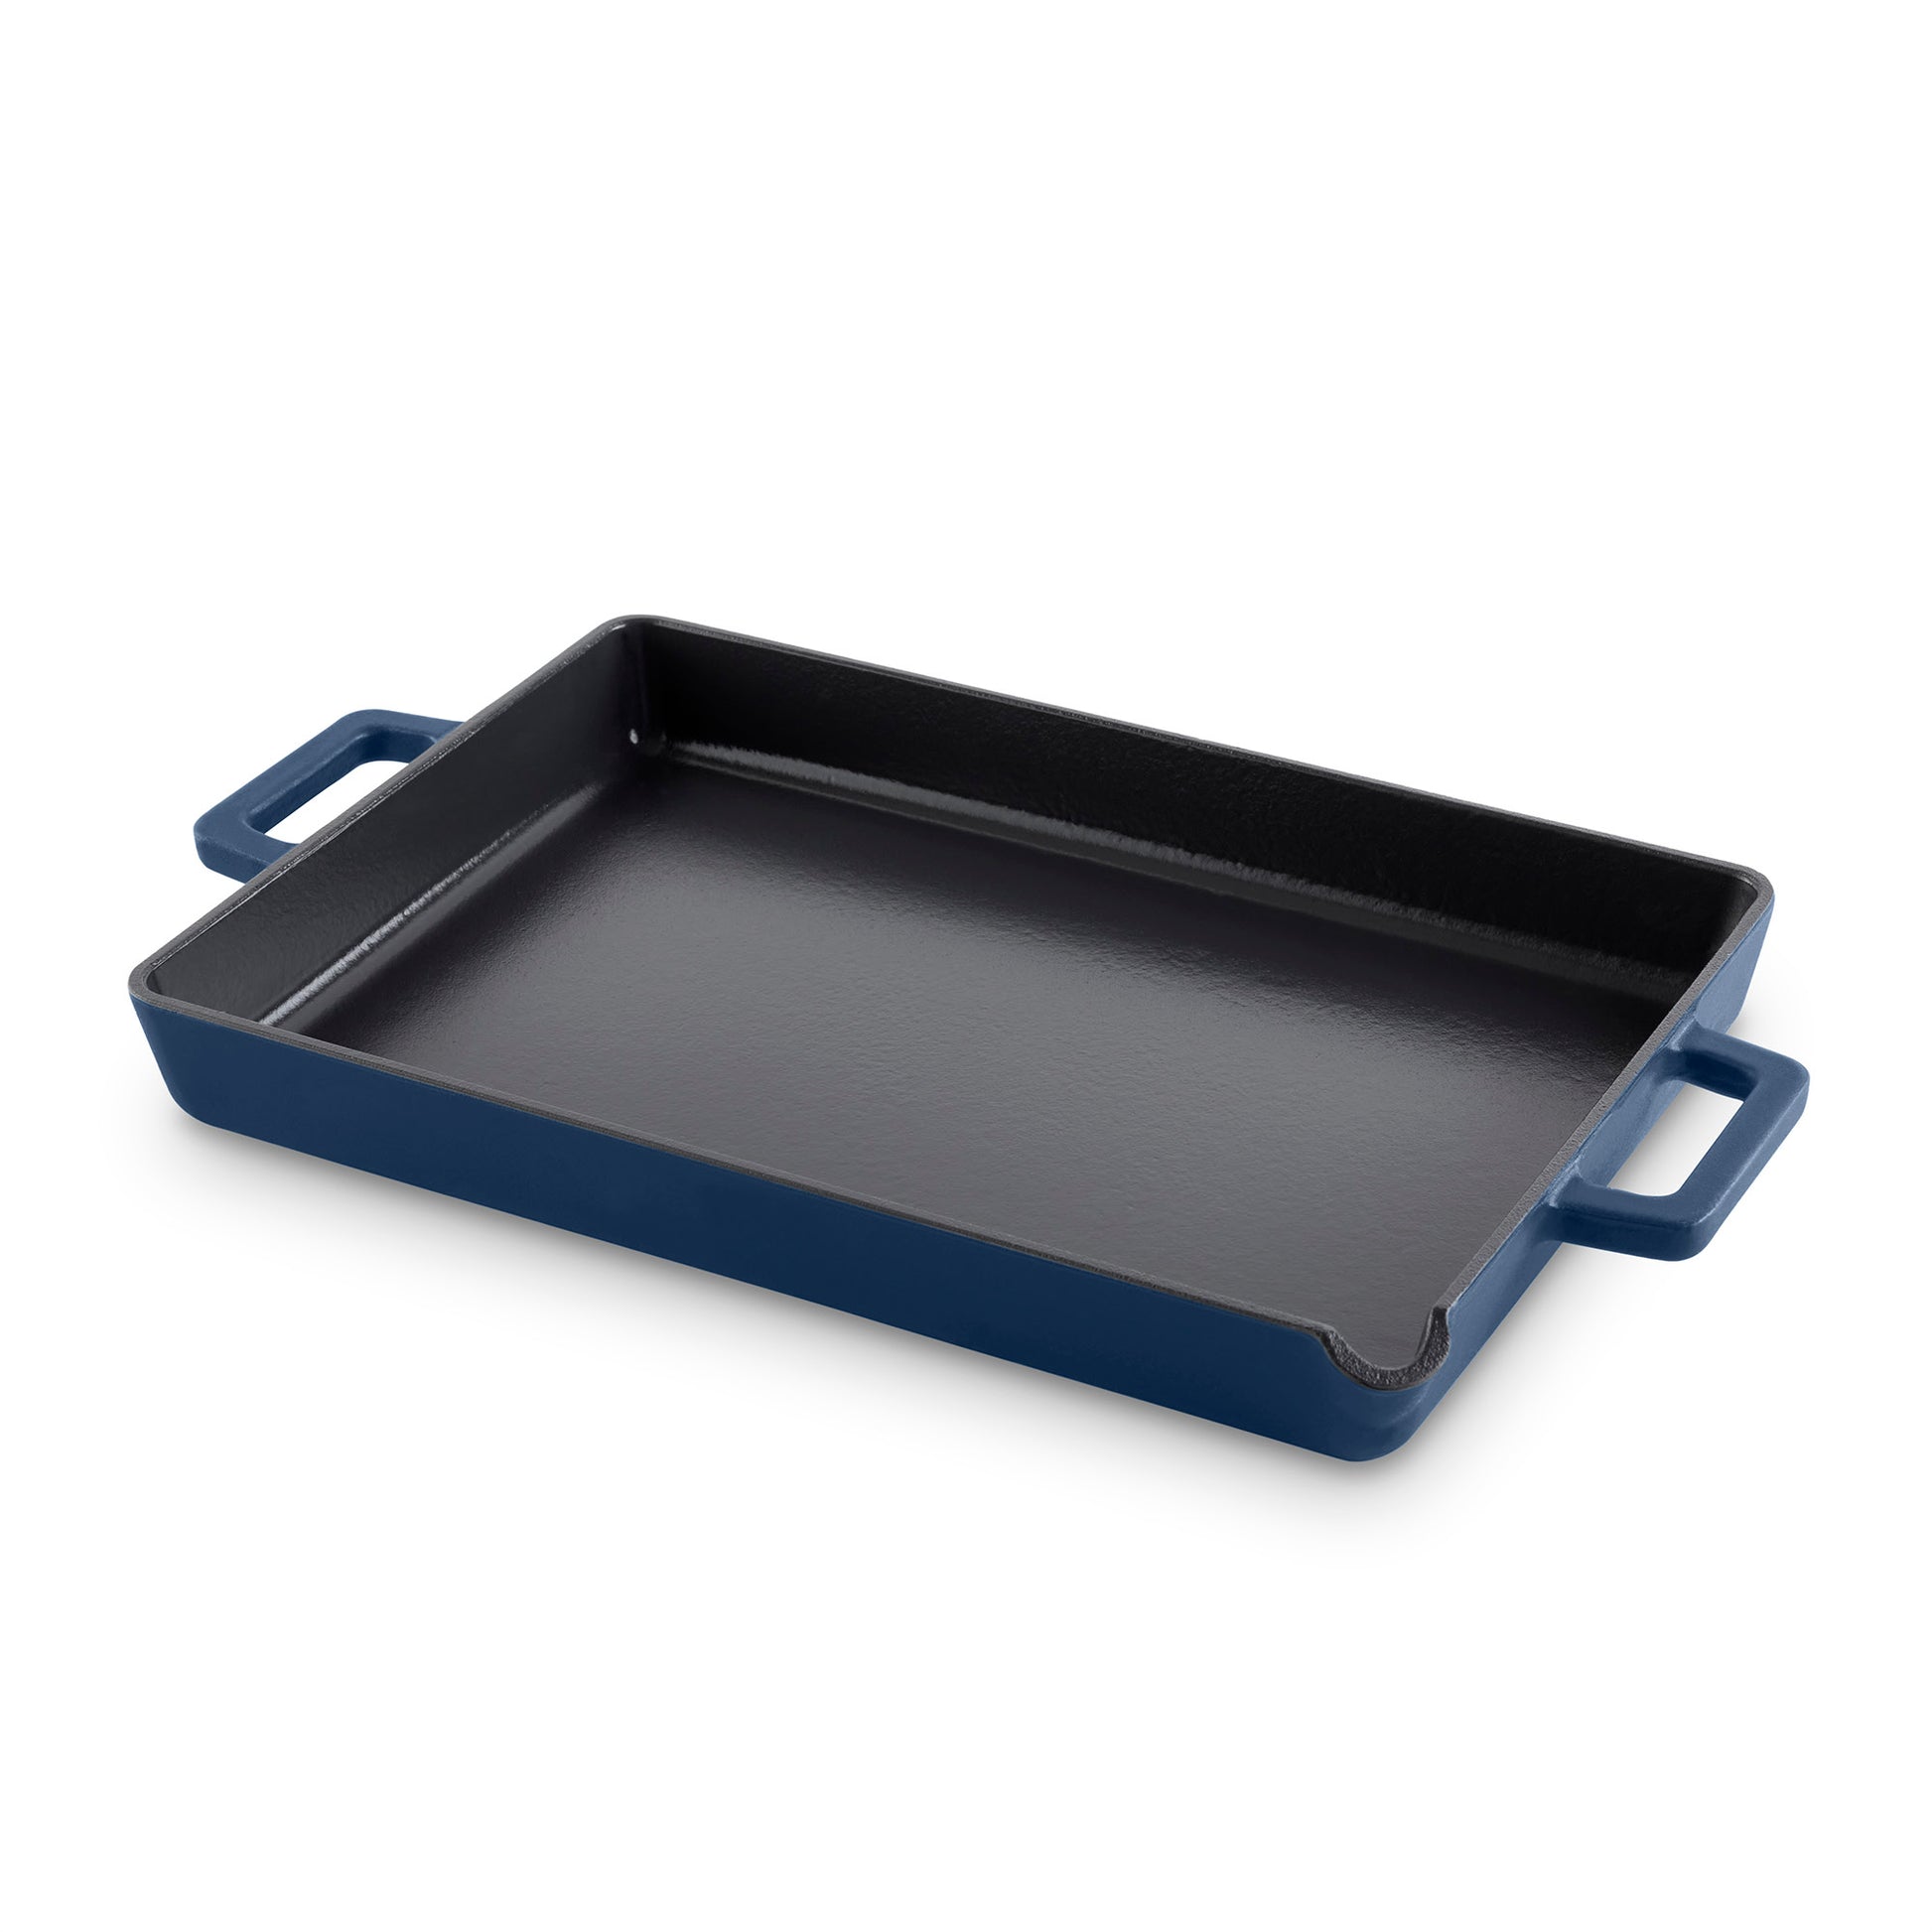  Zakarian by Dash 13 Inch Nonstick Cast Iron Dual Handle Pan,  Titanium Ceramic Coated Frying Pan, Blue: Home & Kitchen